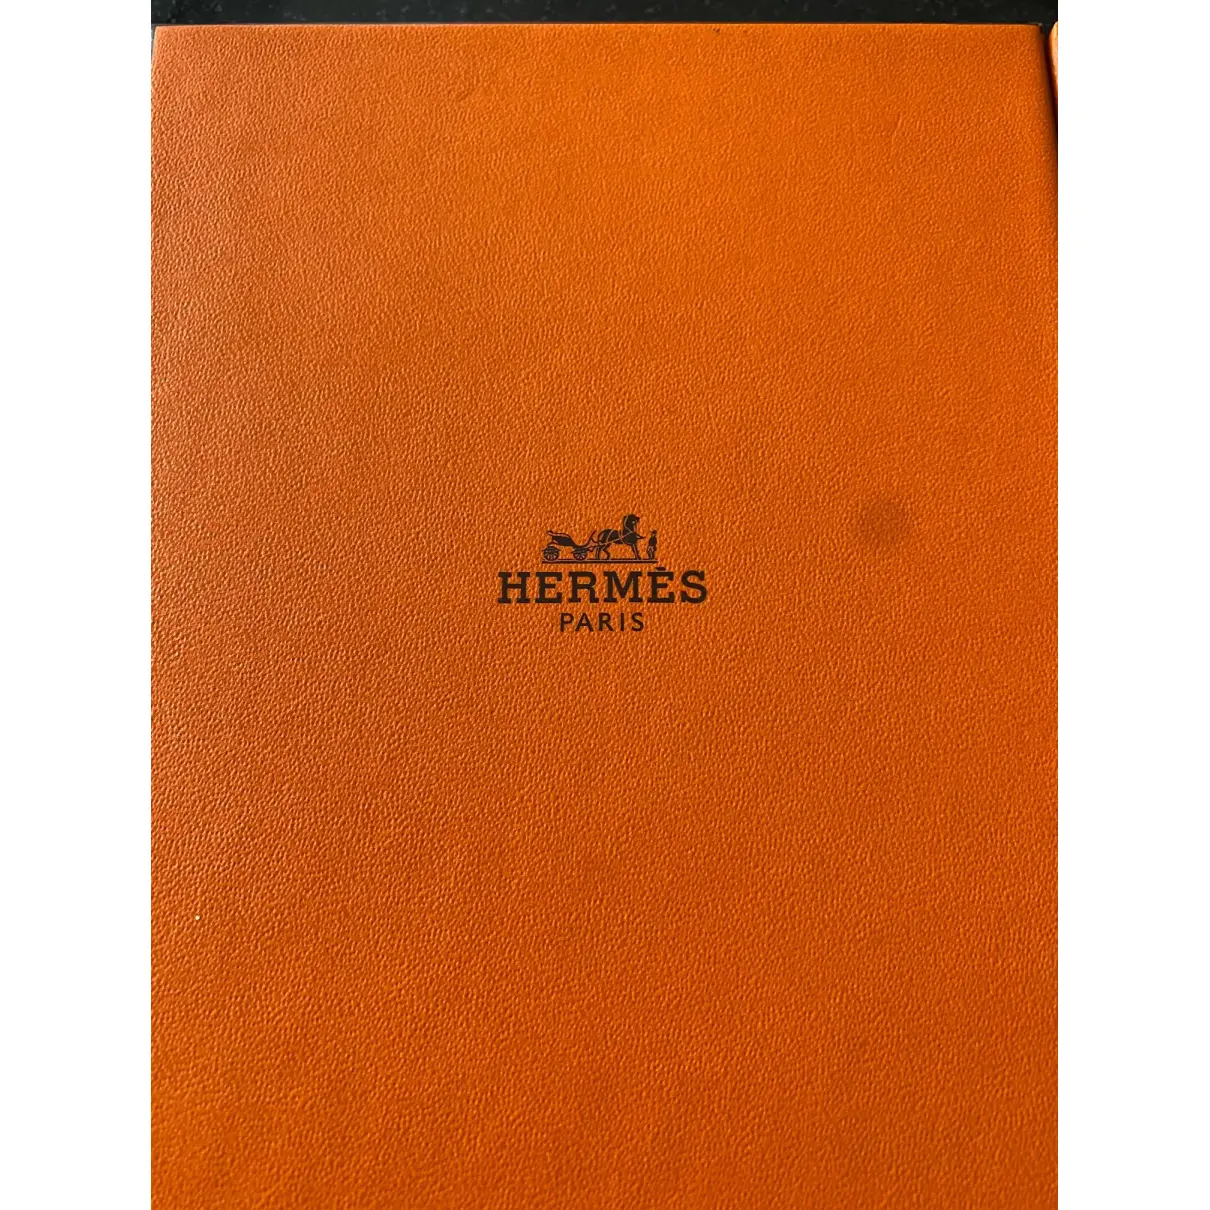 Tarmac leather purse Hermès